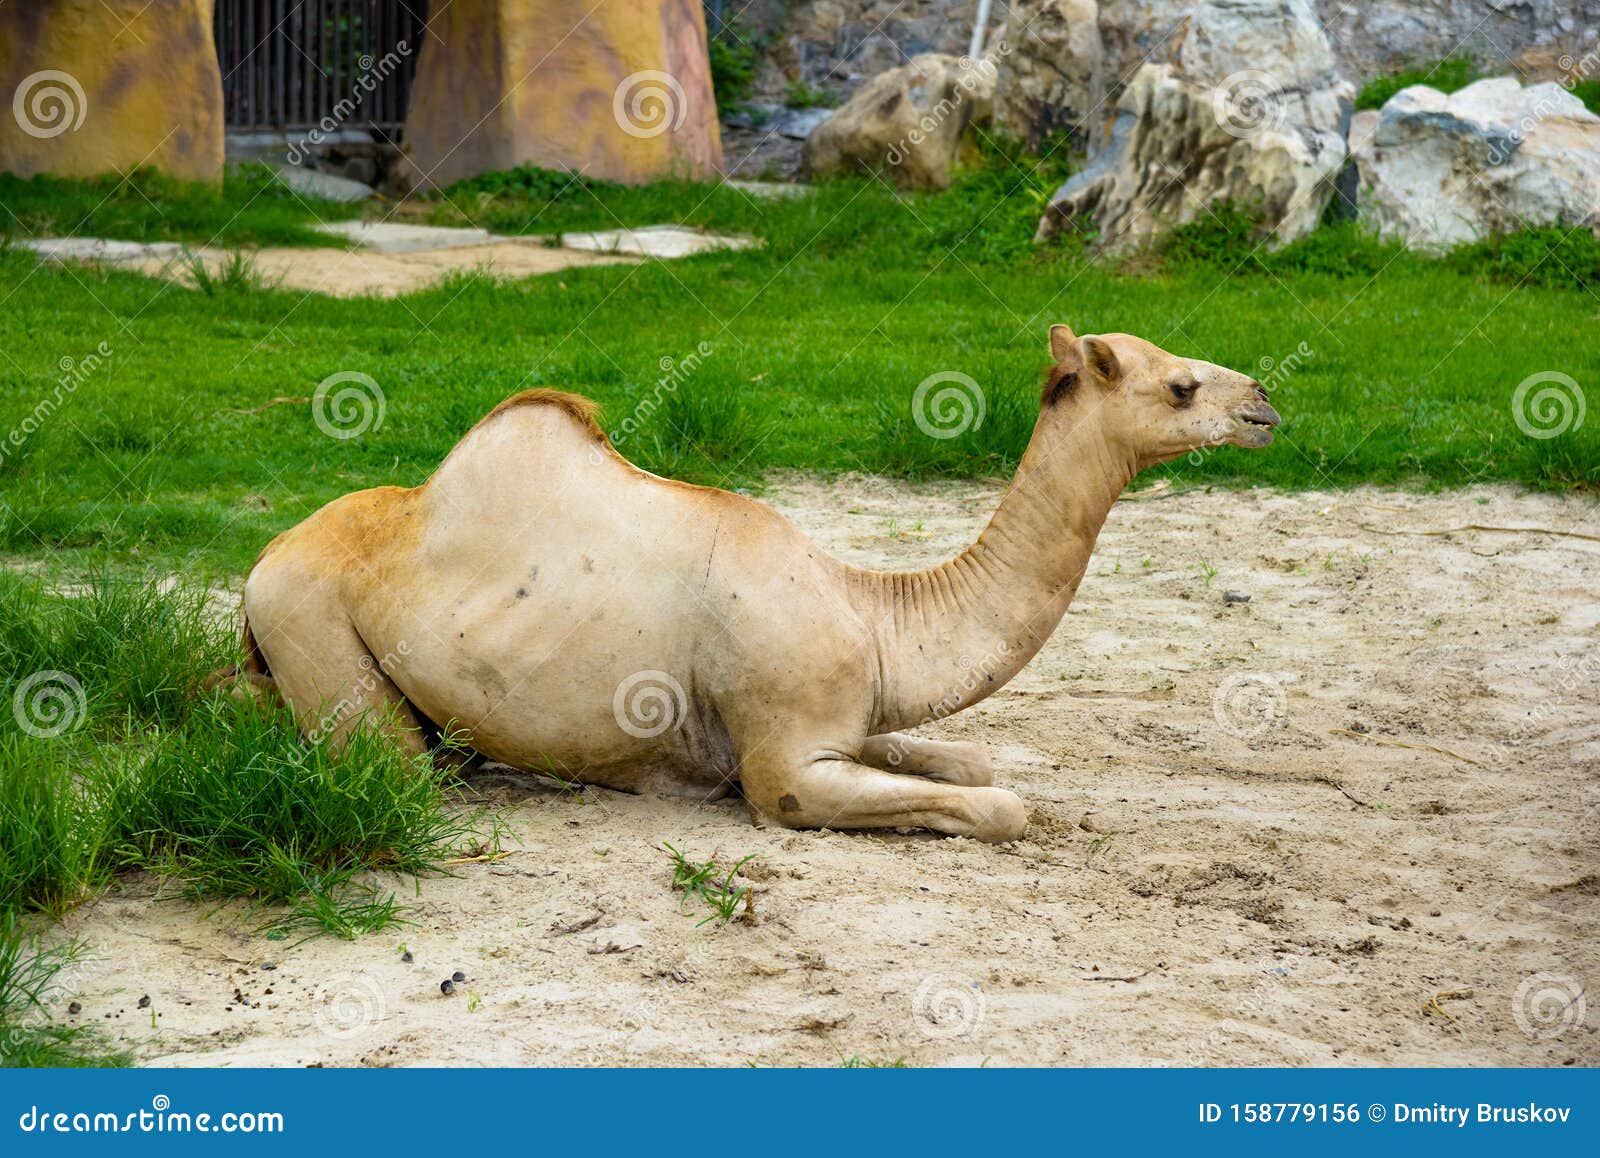 Hairy Asian Camel Hump Stock Photos - Download 41 Royalty Free Photos